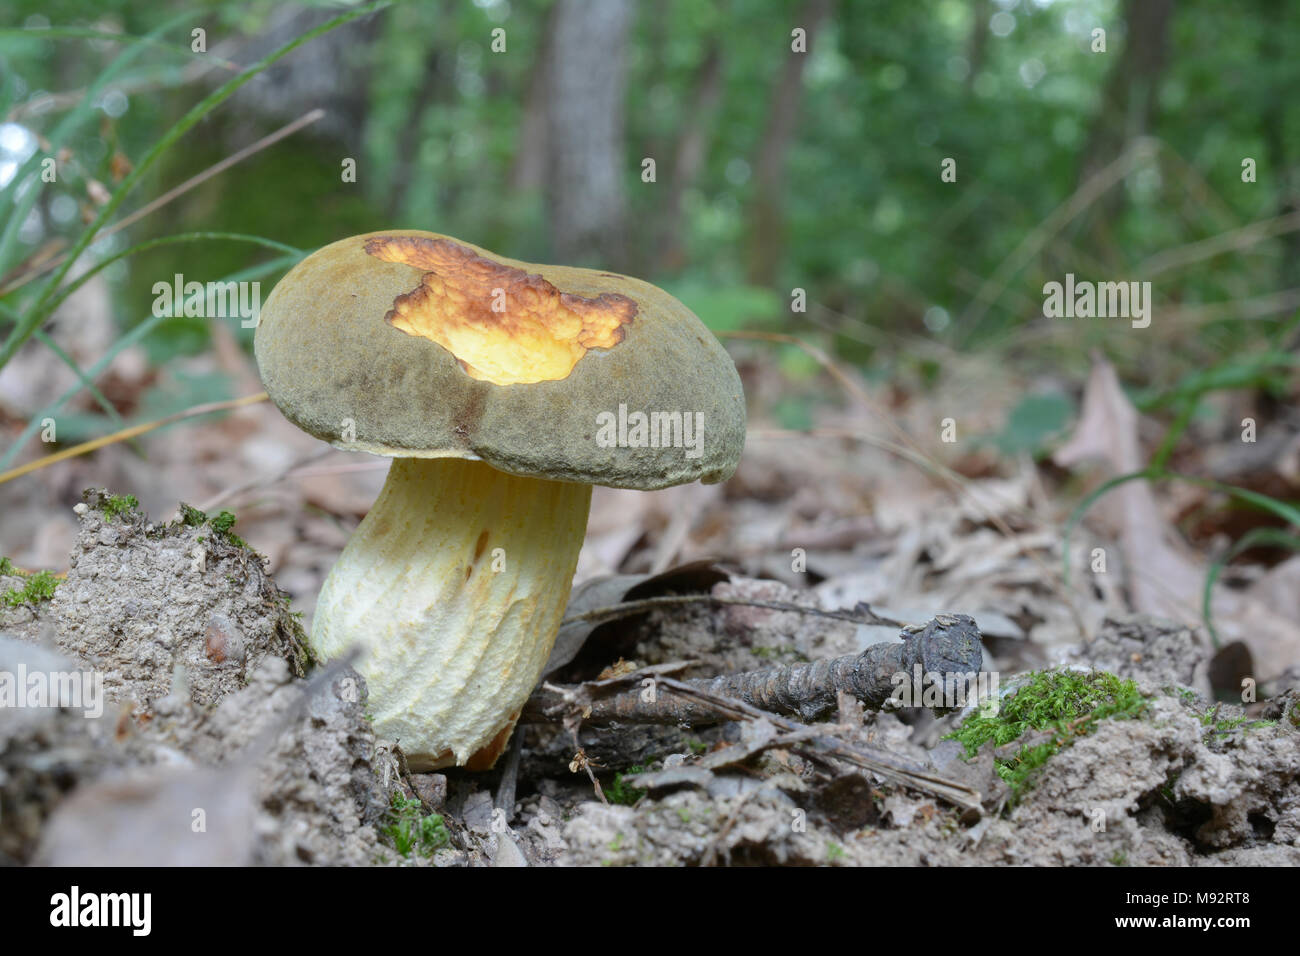 Xerocomus subtomentosus, commonly known as Suede bolete, Brown and yellow bolet, Boring brown bolete or Yellow-cracked bolete, wild edible mushroom in Stock Photo